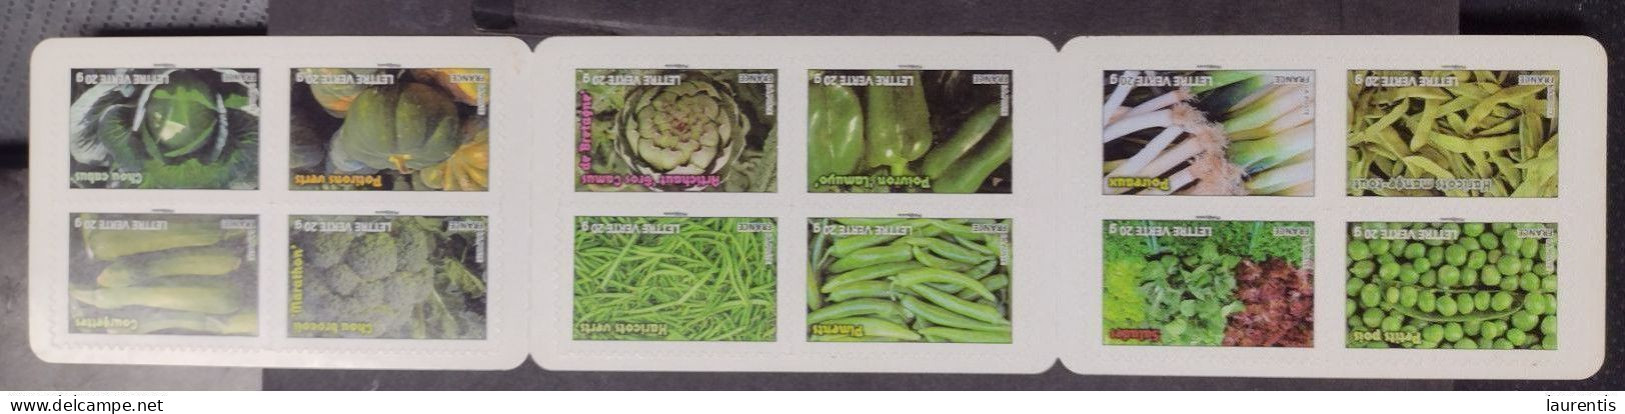 D7028  Vegetables - Foods - France MNH - Face Value 13€92 - 1€16 Each - 12,75 - Légumes